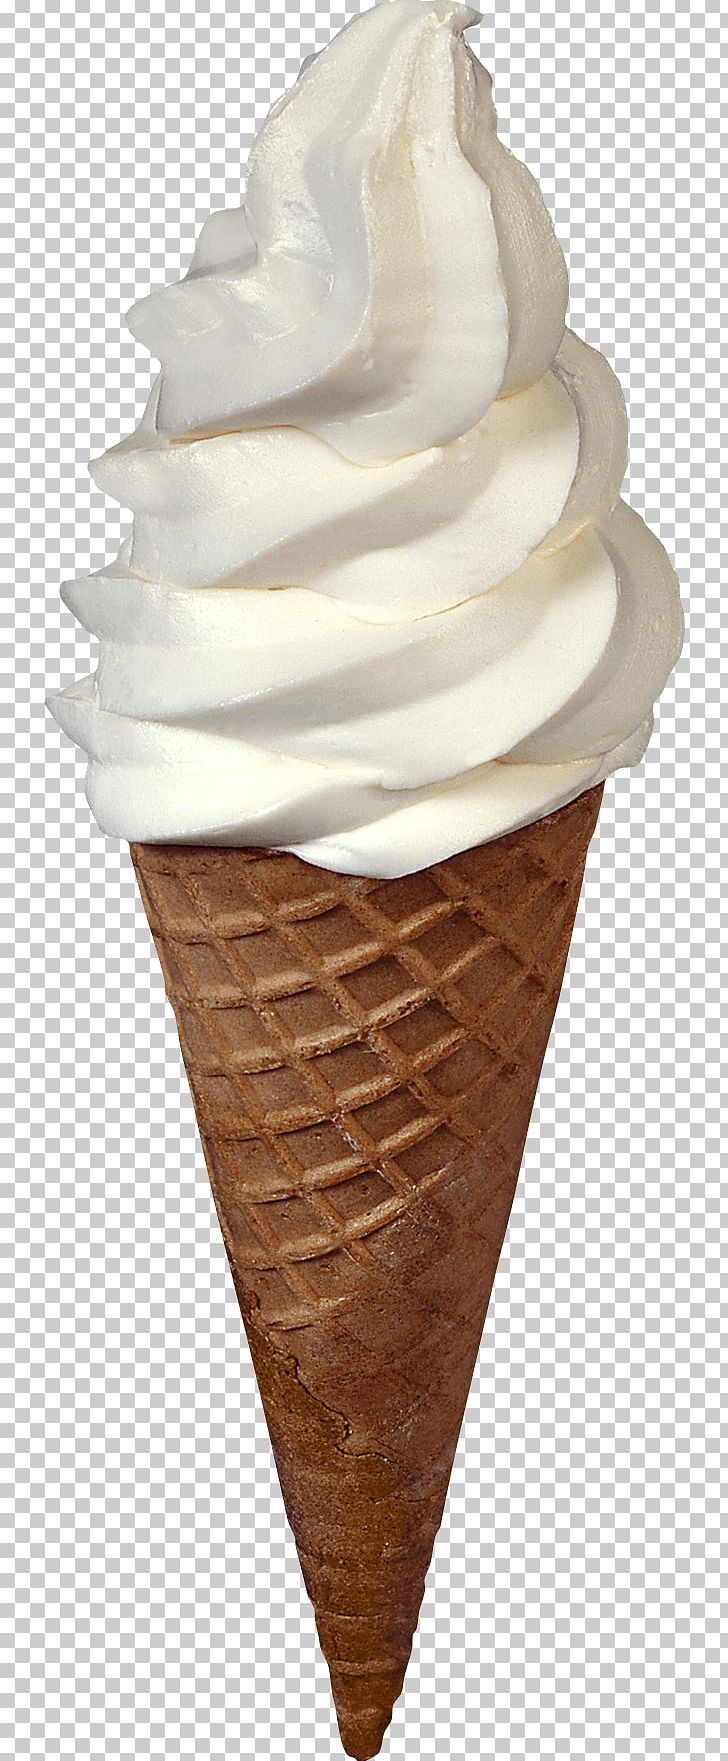 Ice Cream Cones Frozen Yogurt Chocolate Ice Cream PNG, Clipart, Chocolate Ice Cream, Computer Icons, Cream, Dairy Product, Dessert Free PNG Download